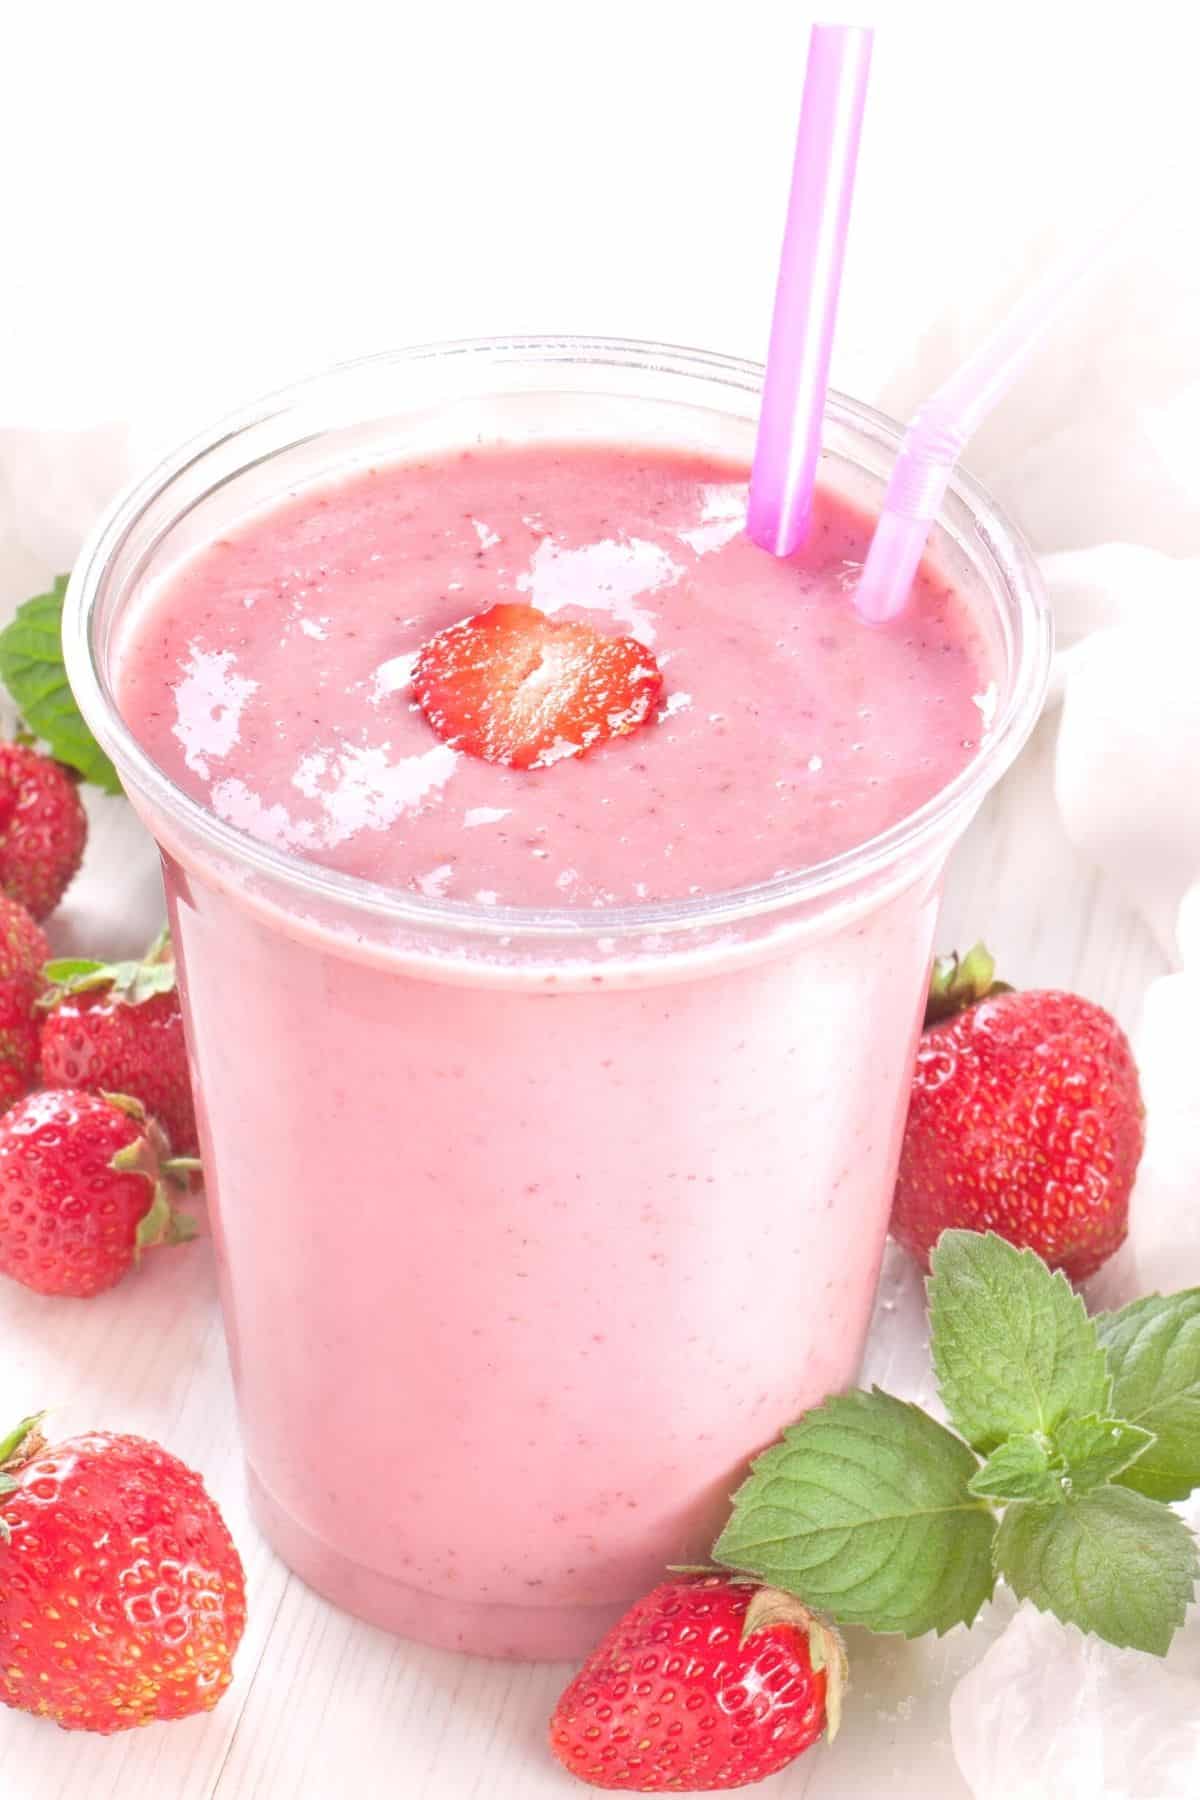 vegan strawberry milkshake served in glass with pink straws